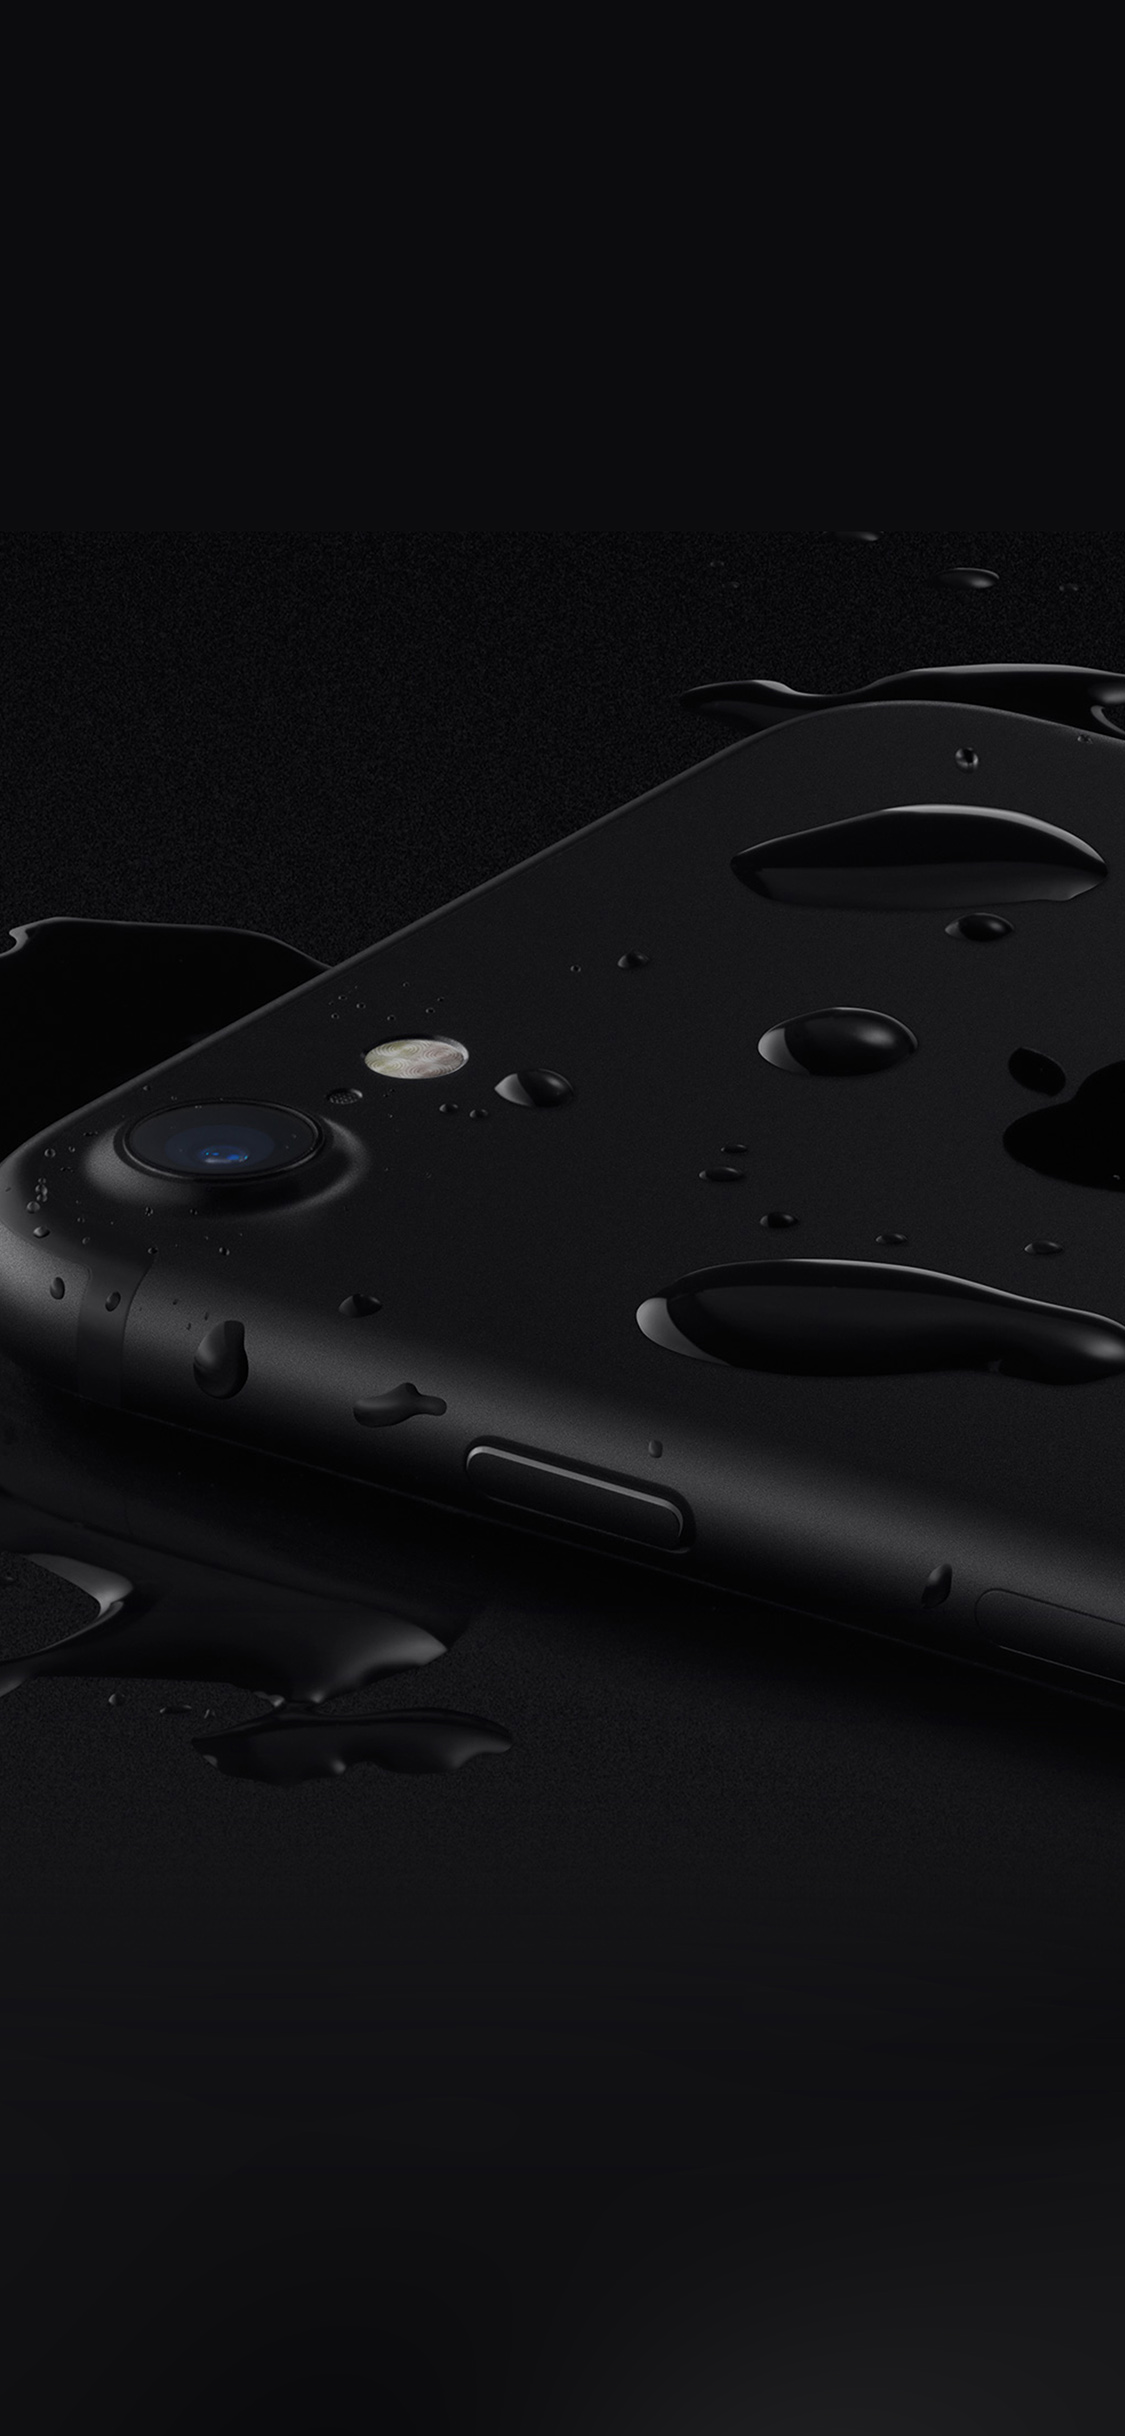 iPhone X wallpaper. iphone7 black water resistant apple art illustration